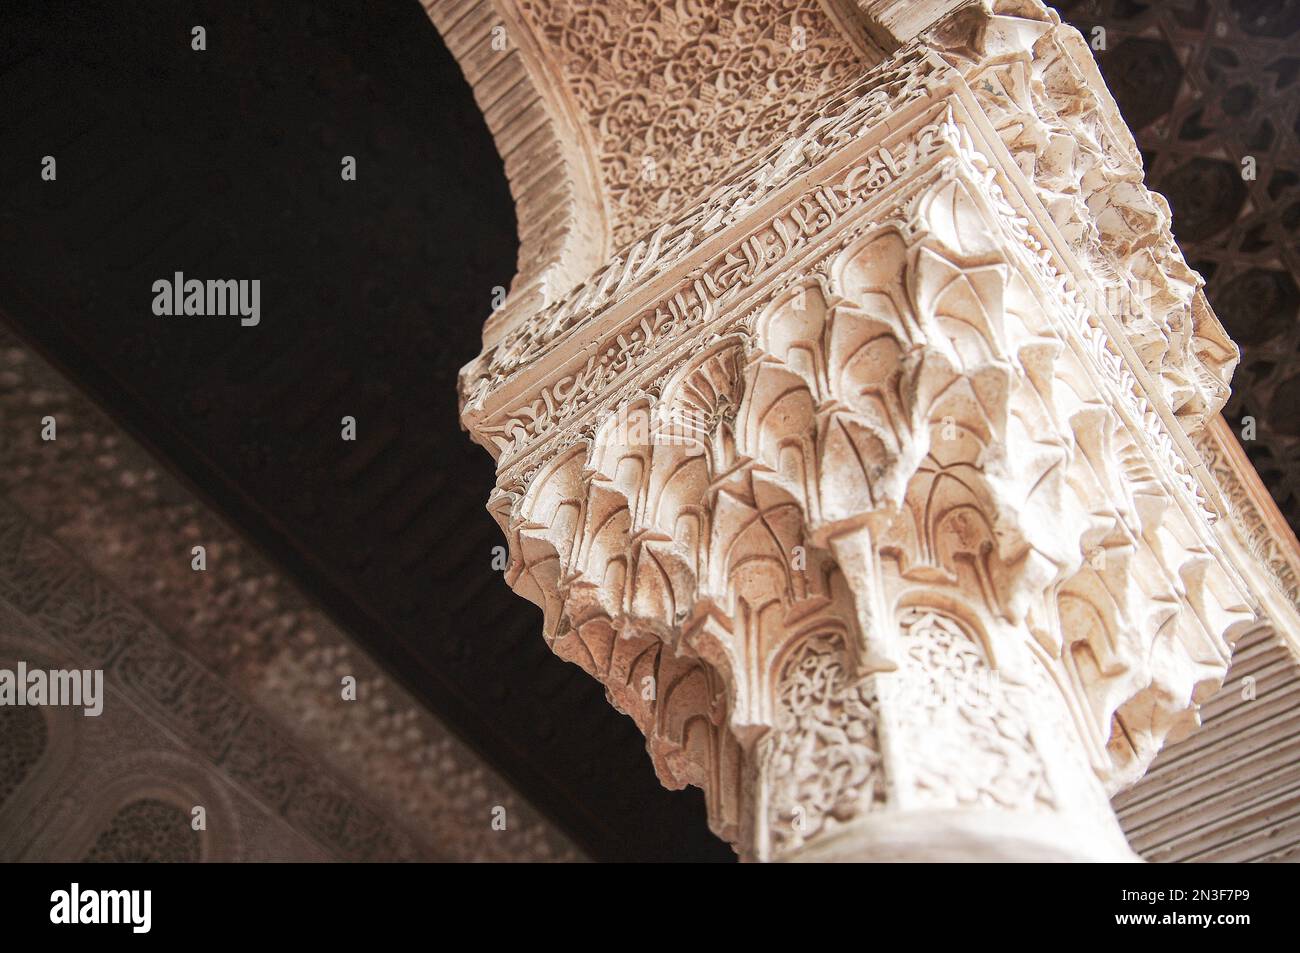 Nasrid-era Moorish architecture, decorative arches and ceilings at the Patio de los Leones (Court of the Lions) — the Alhambra; Granada, Spain Stock Photo